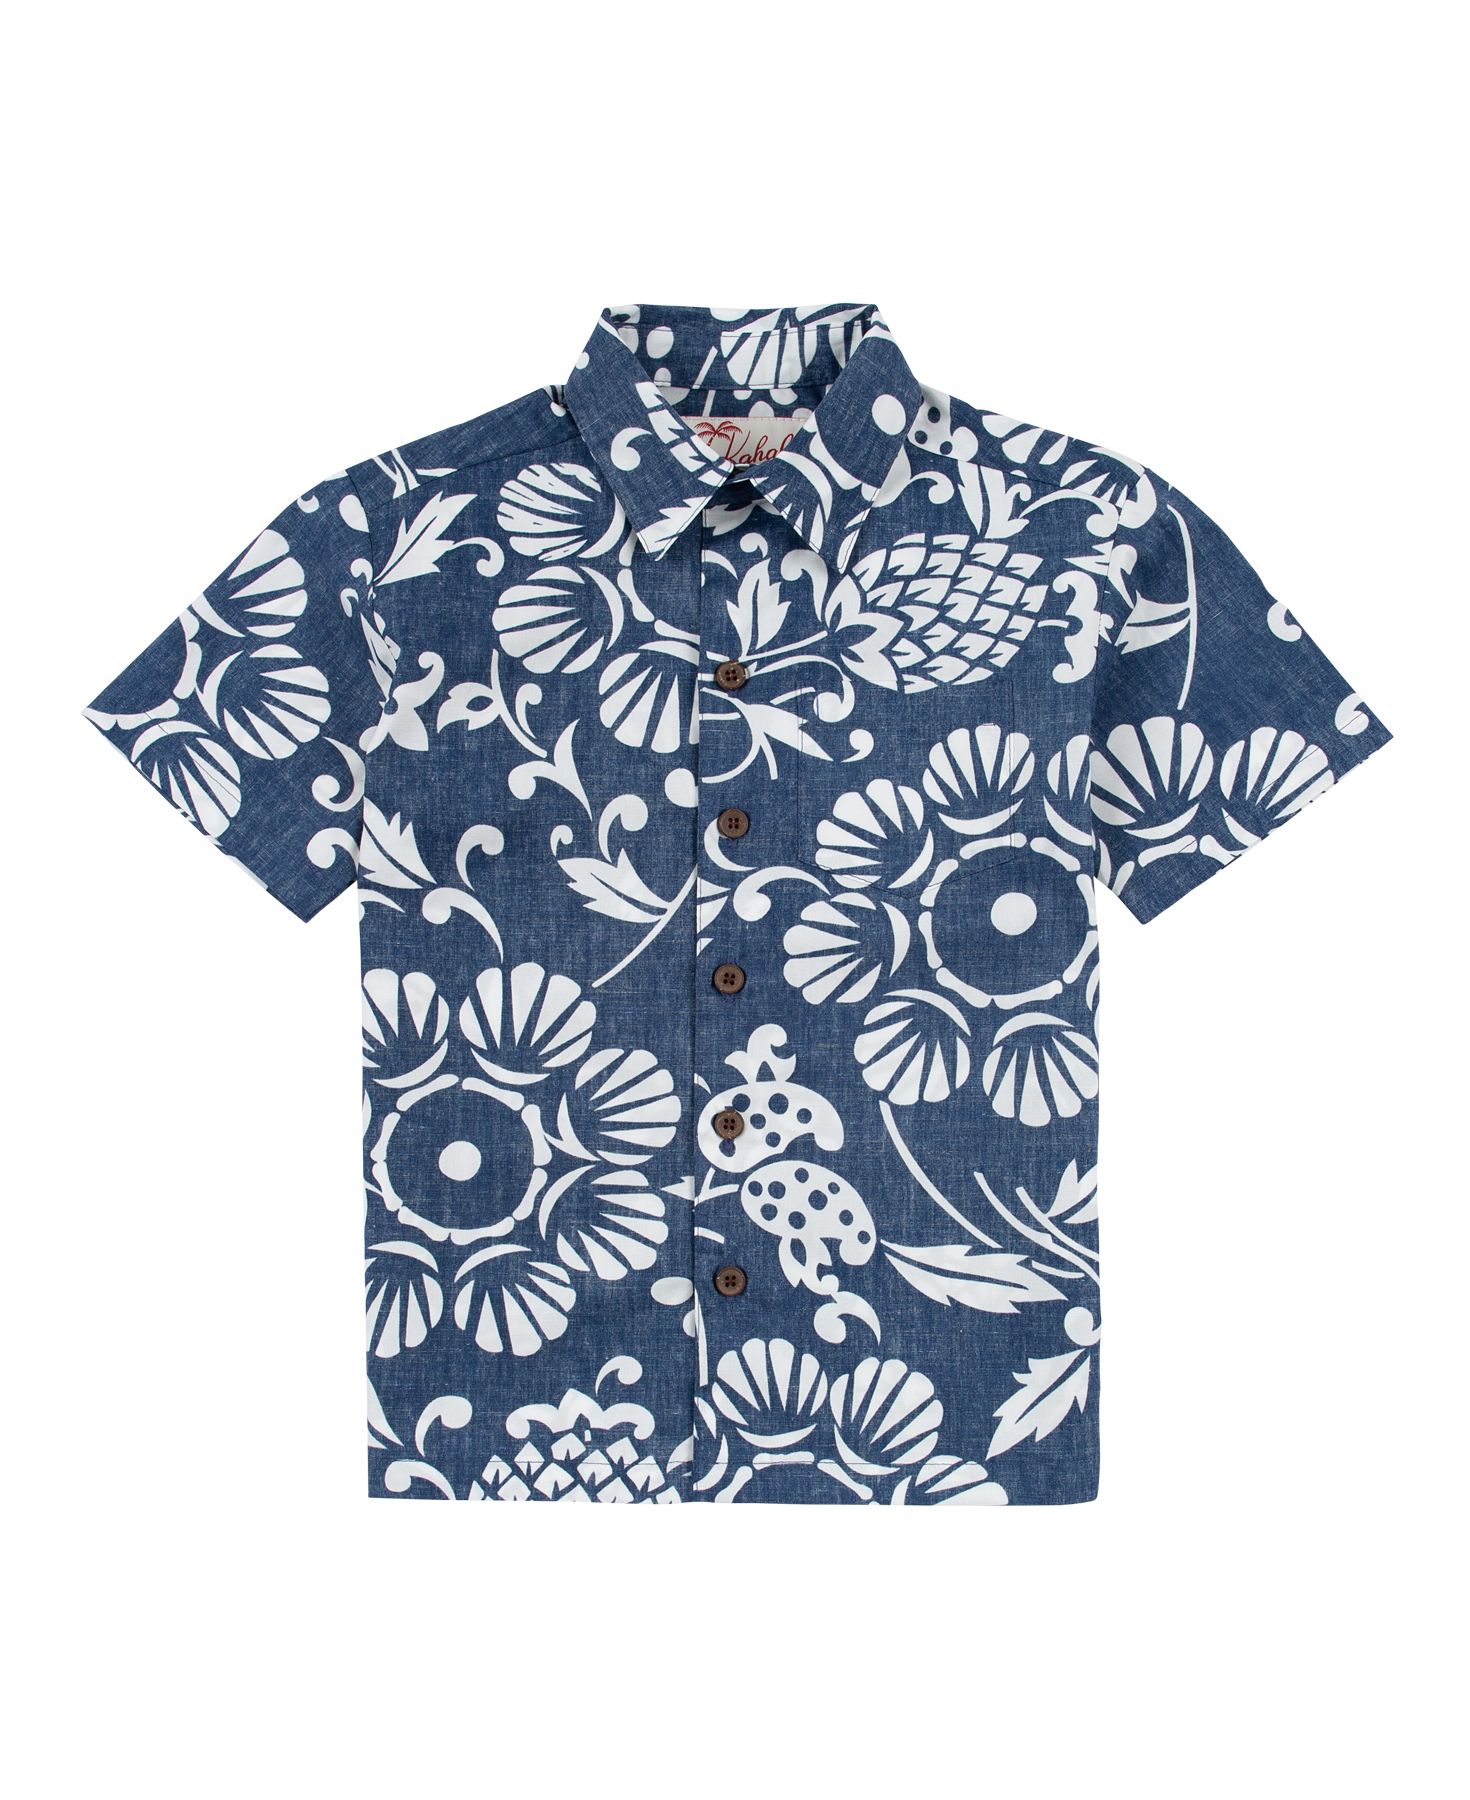 Kahala Aloha Shirt Duke's Pareo - The Most Irresistible Shop in Hilo